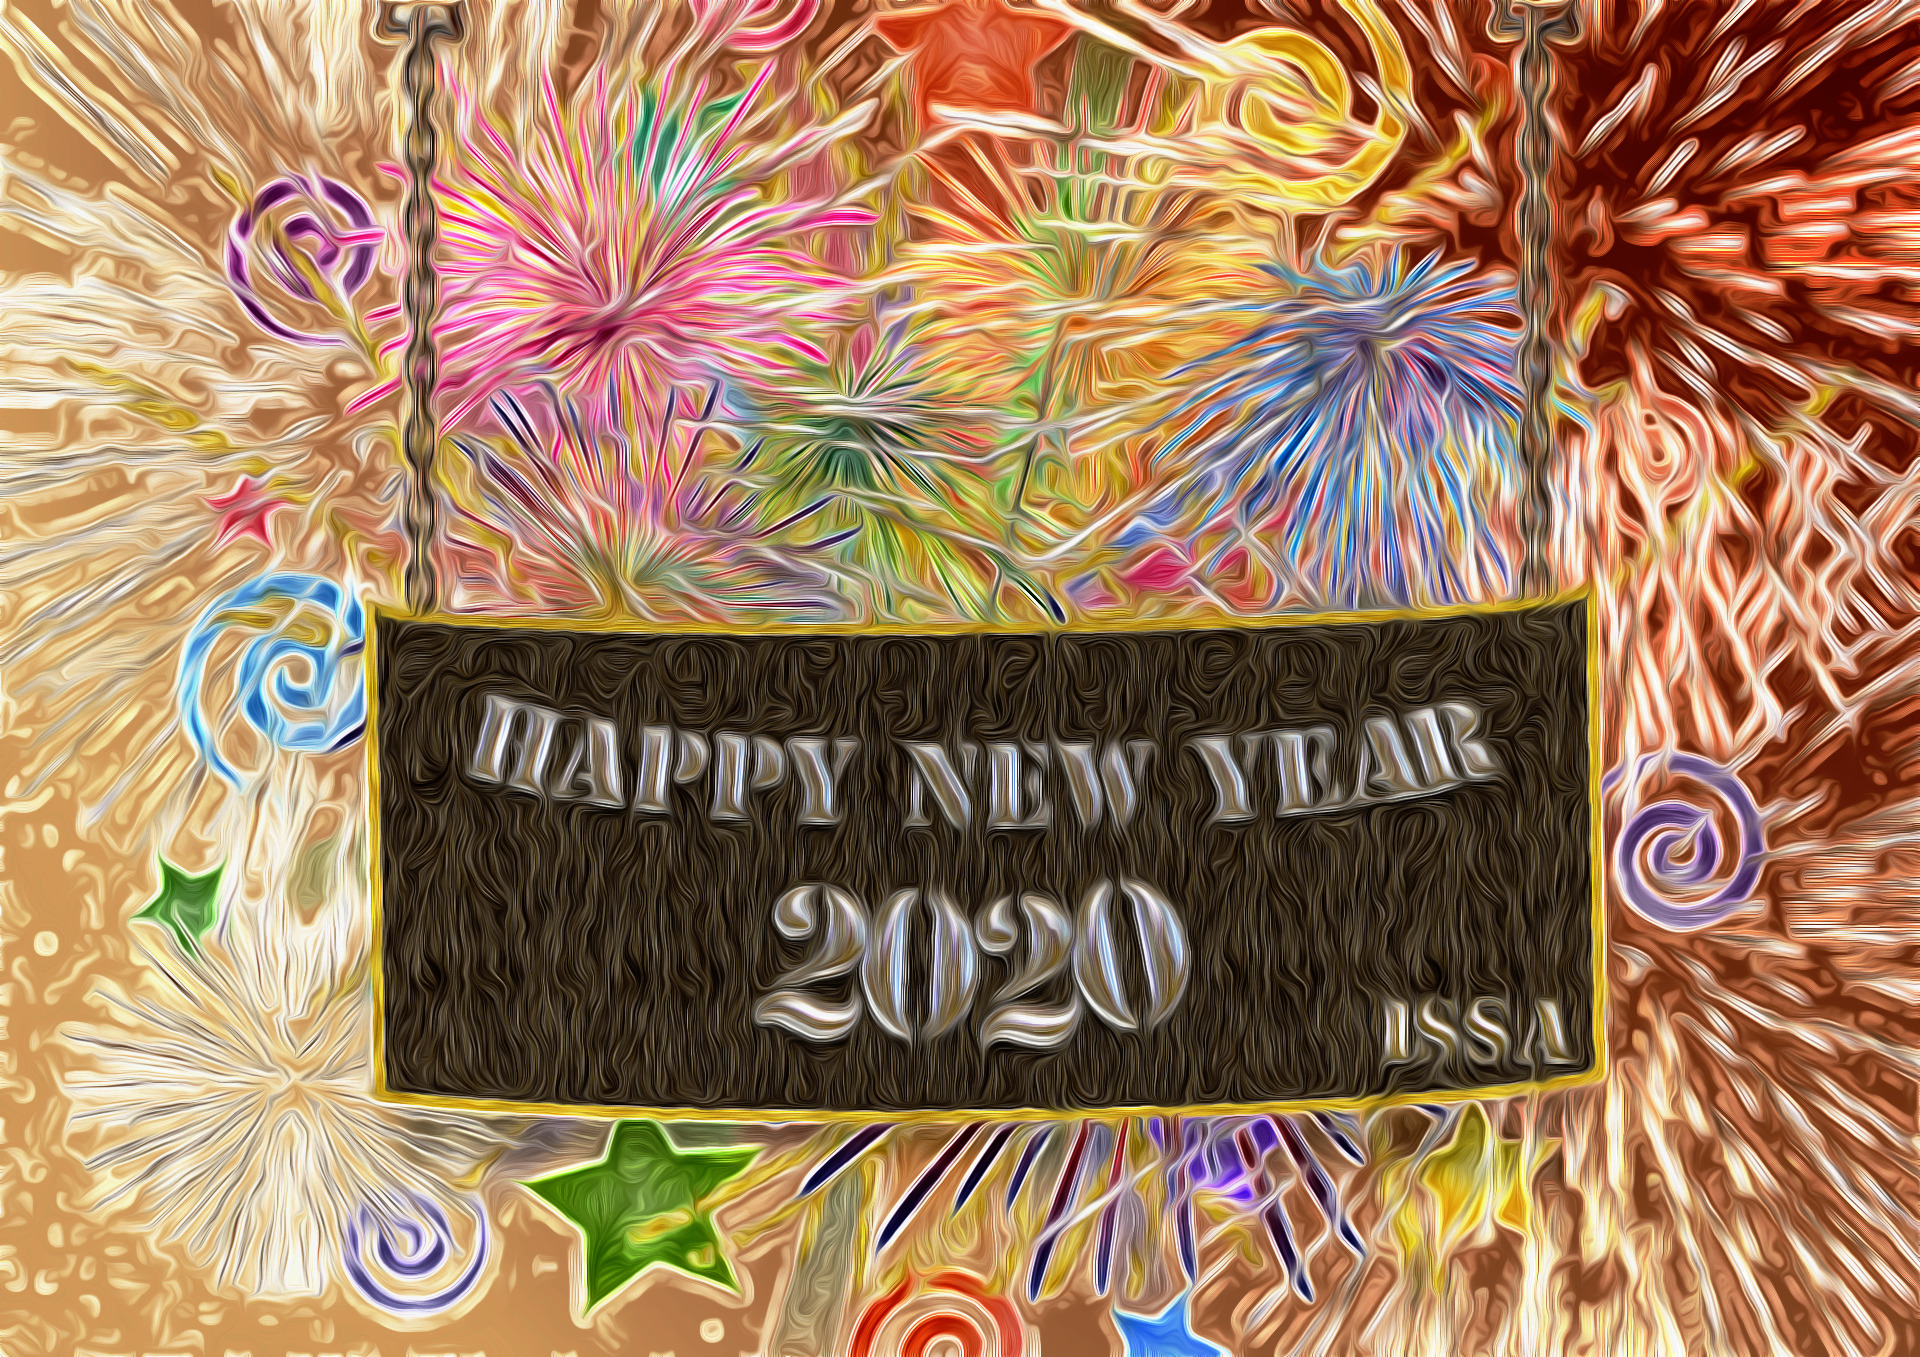 happy-new-year-2020_Issa.JPG